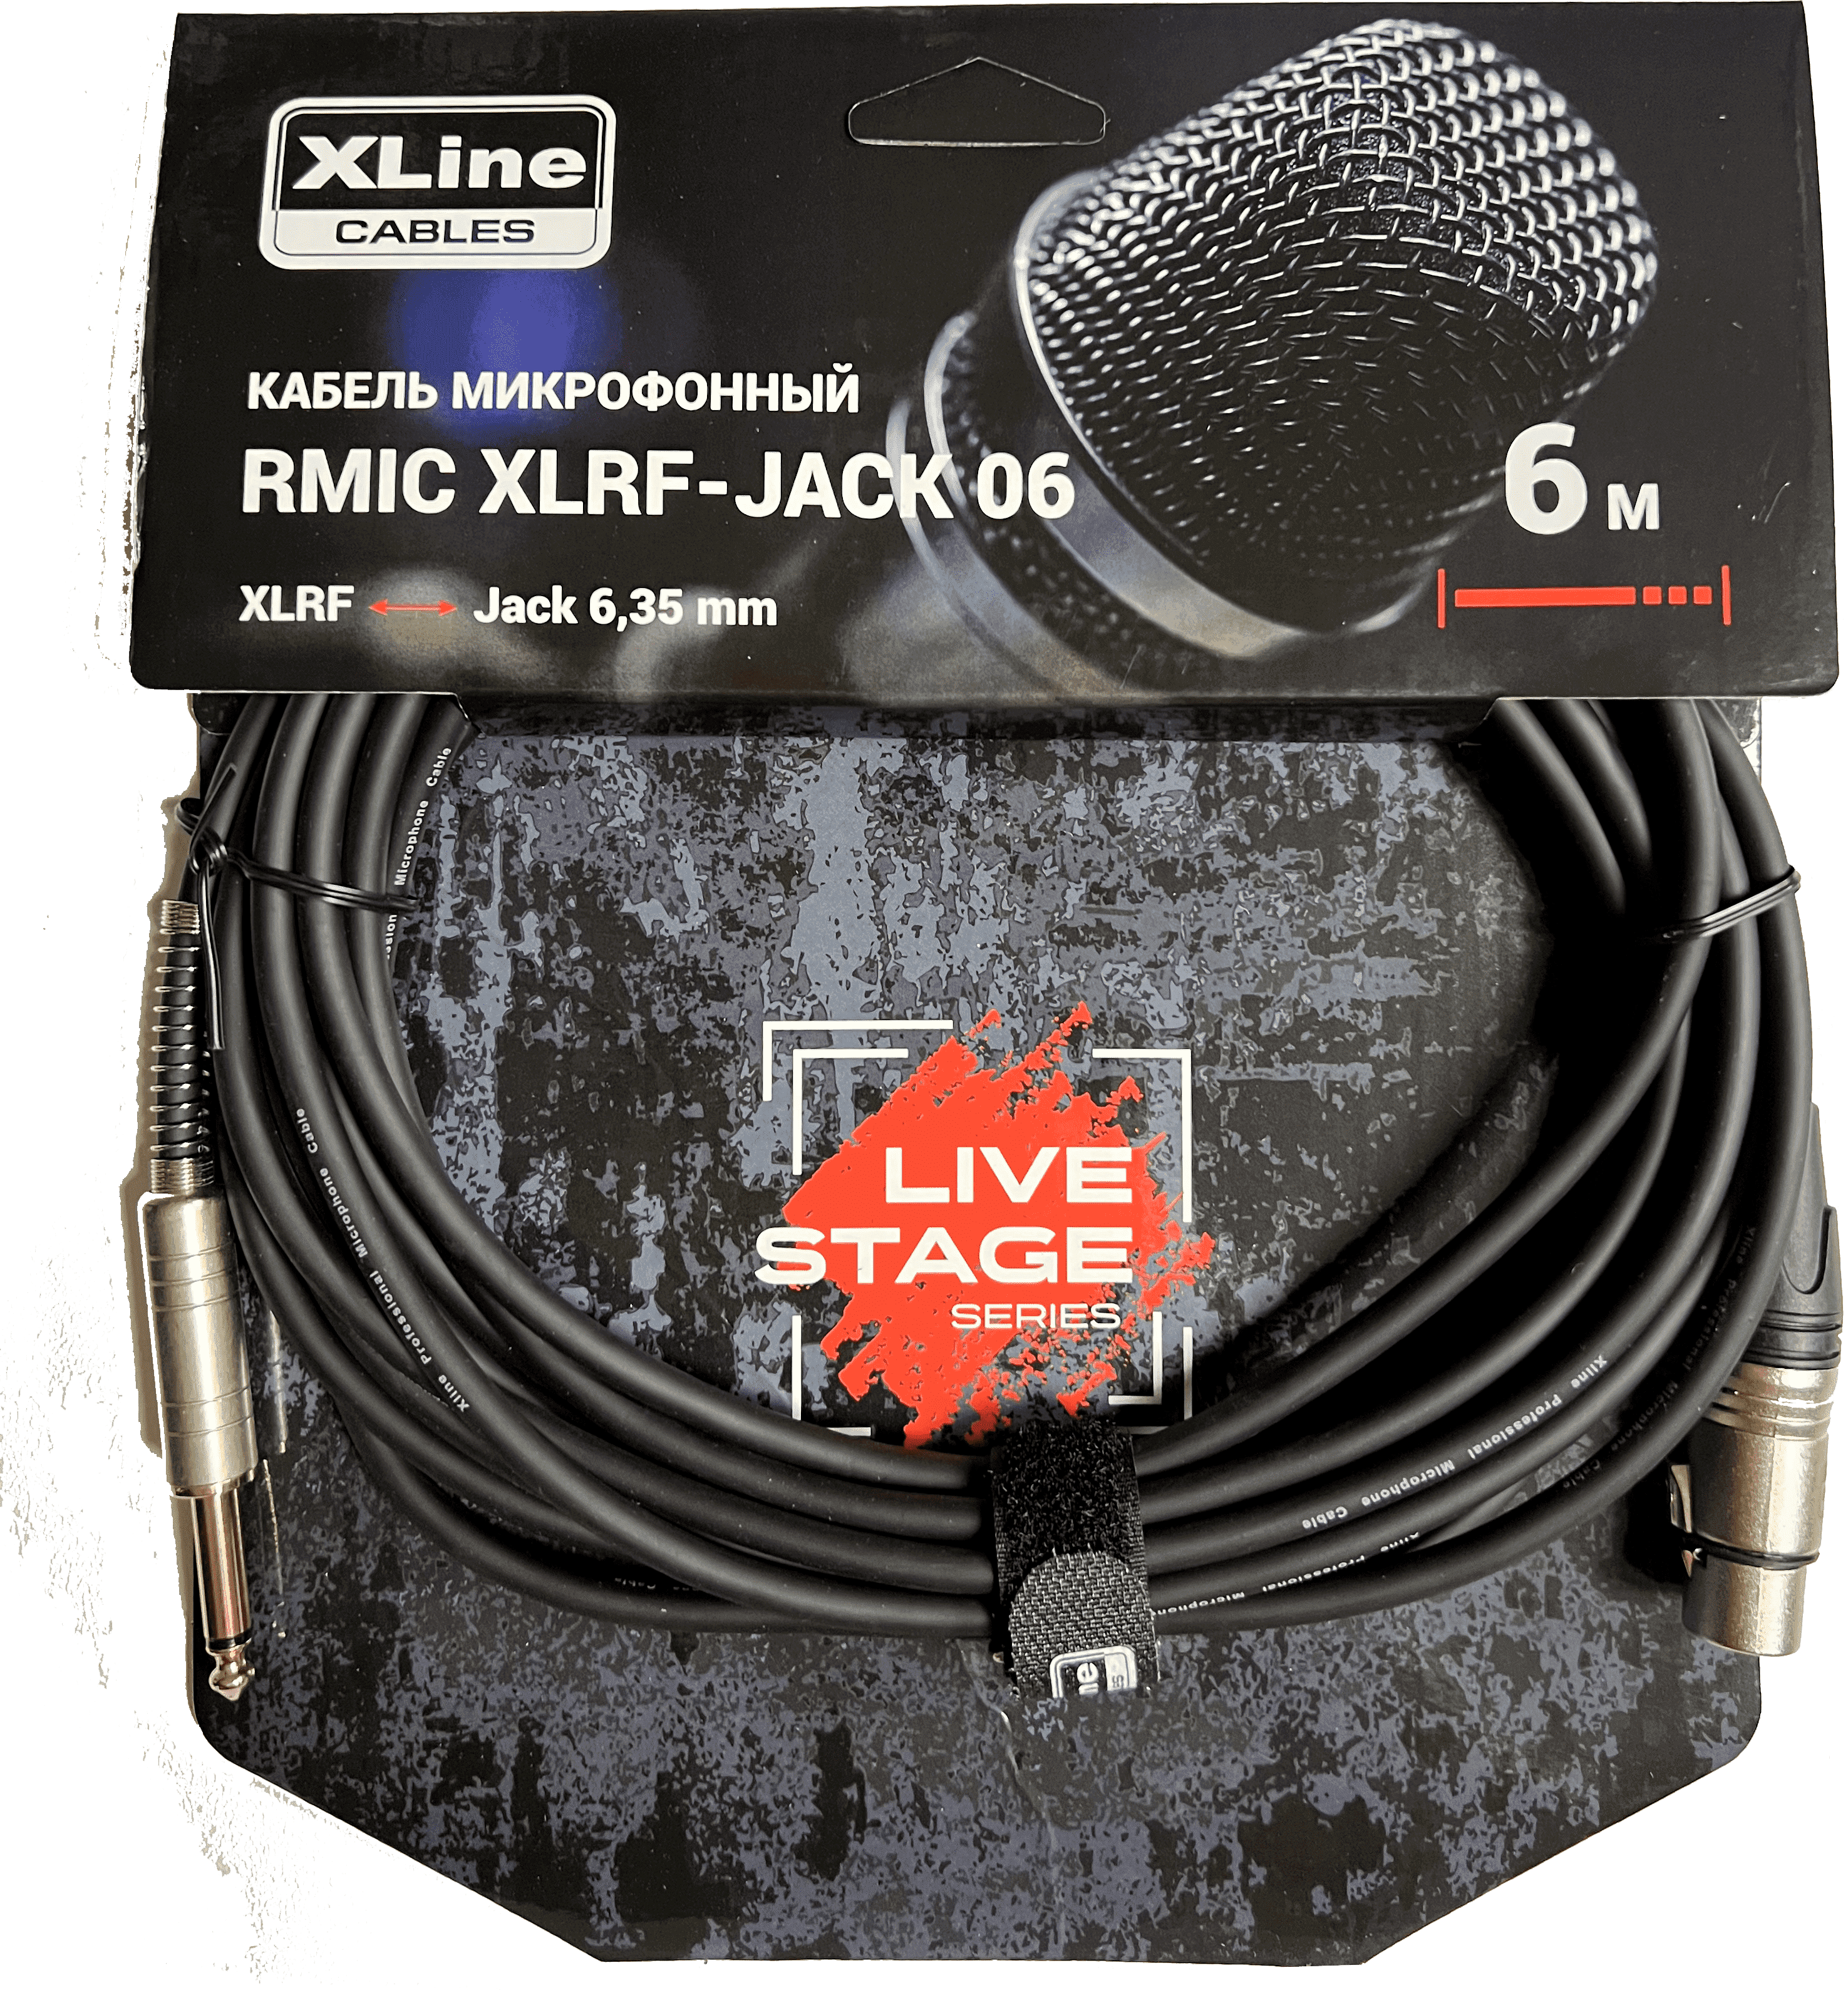 Xline Cables RMIC XLRF-Jack 06 кабель микрофонный XLR 3 pin female - JACL 6.3 mono длина 6м